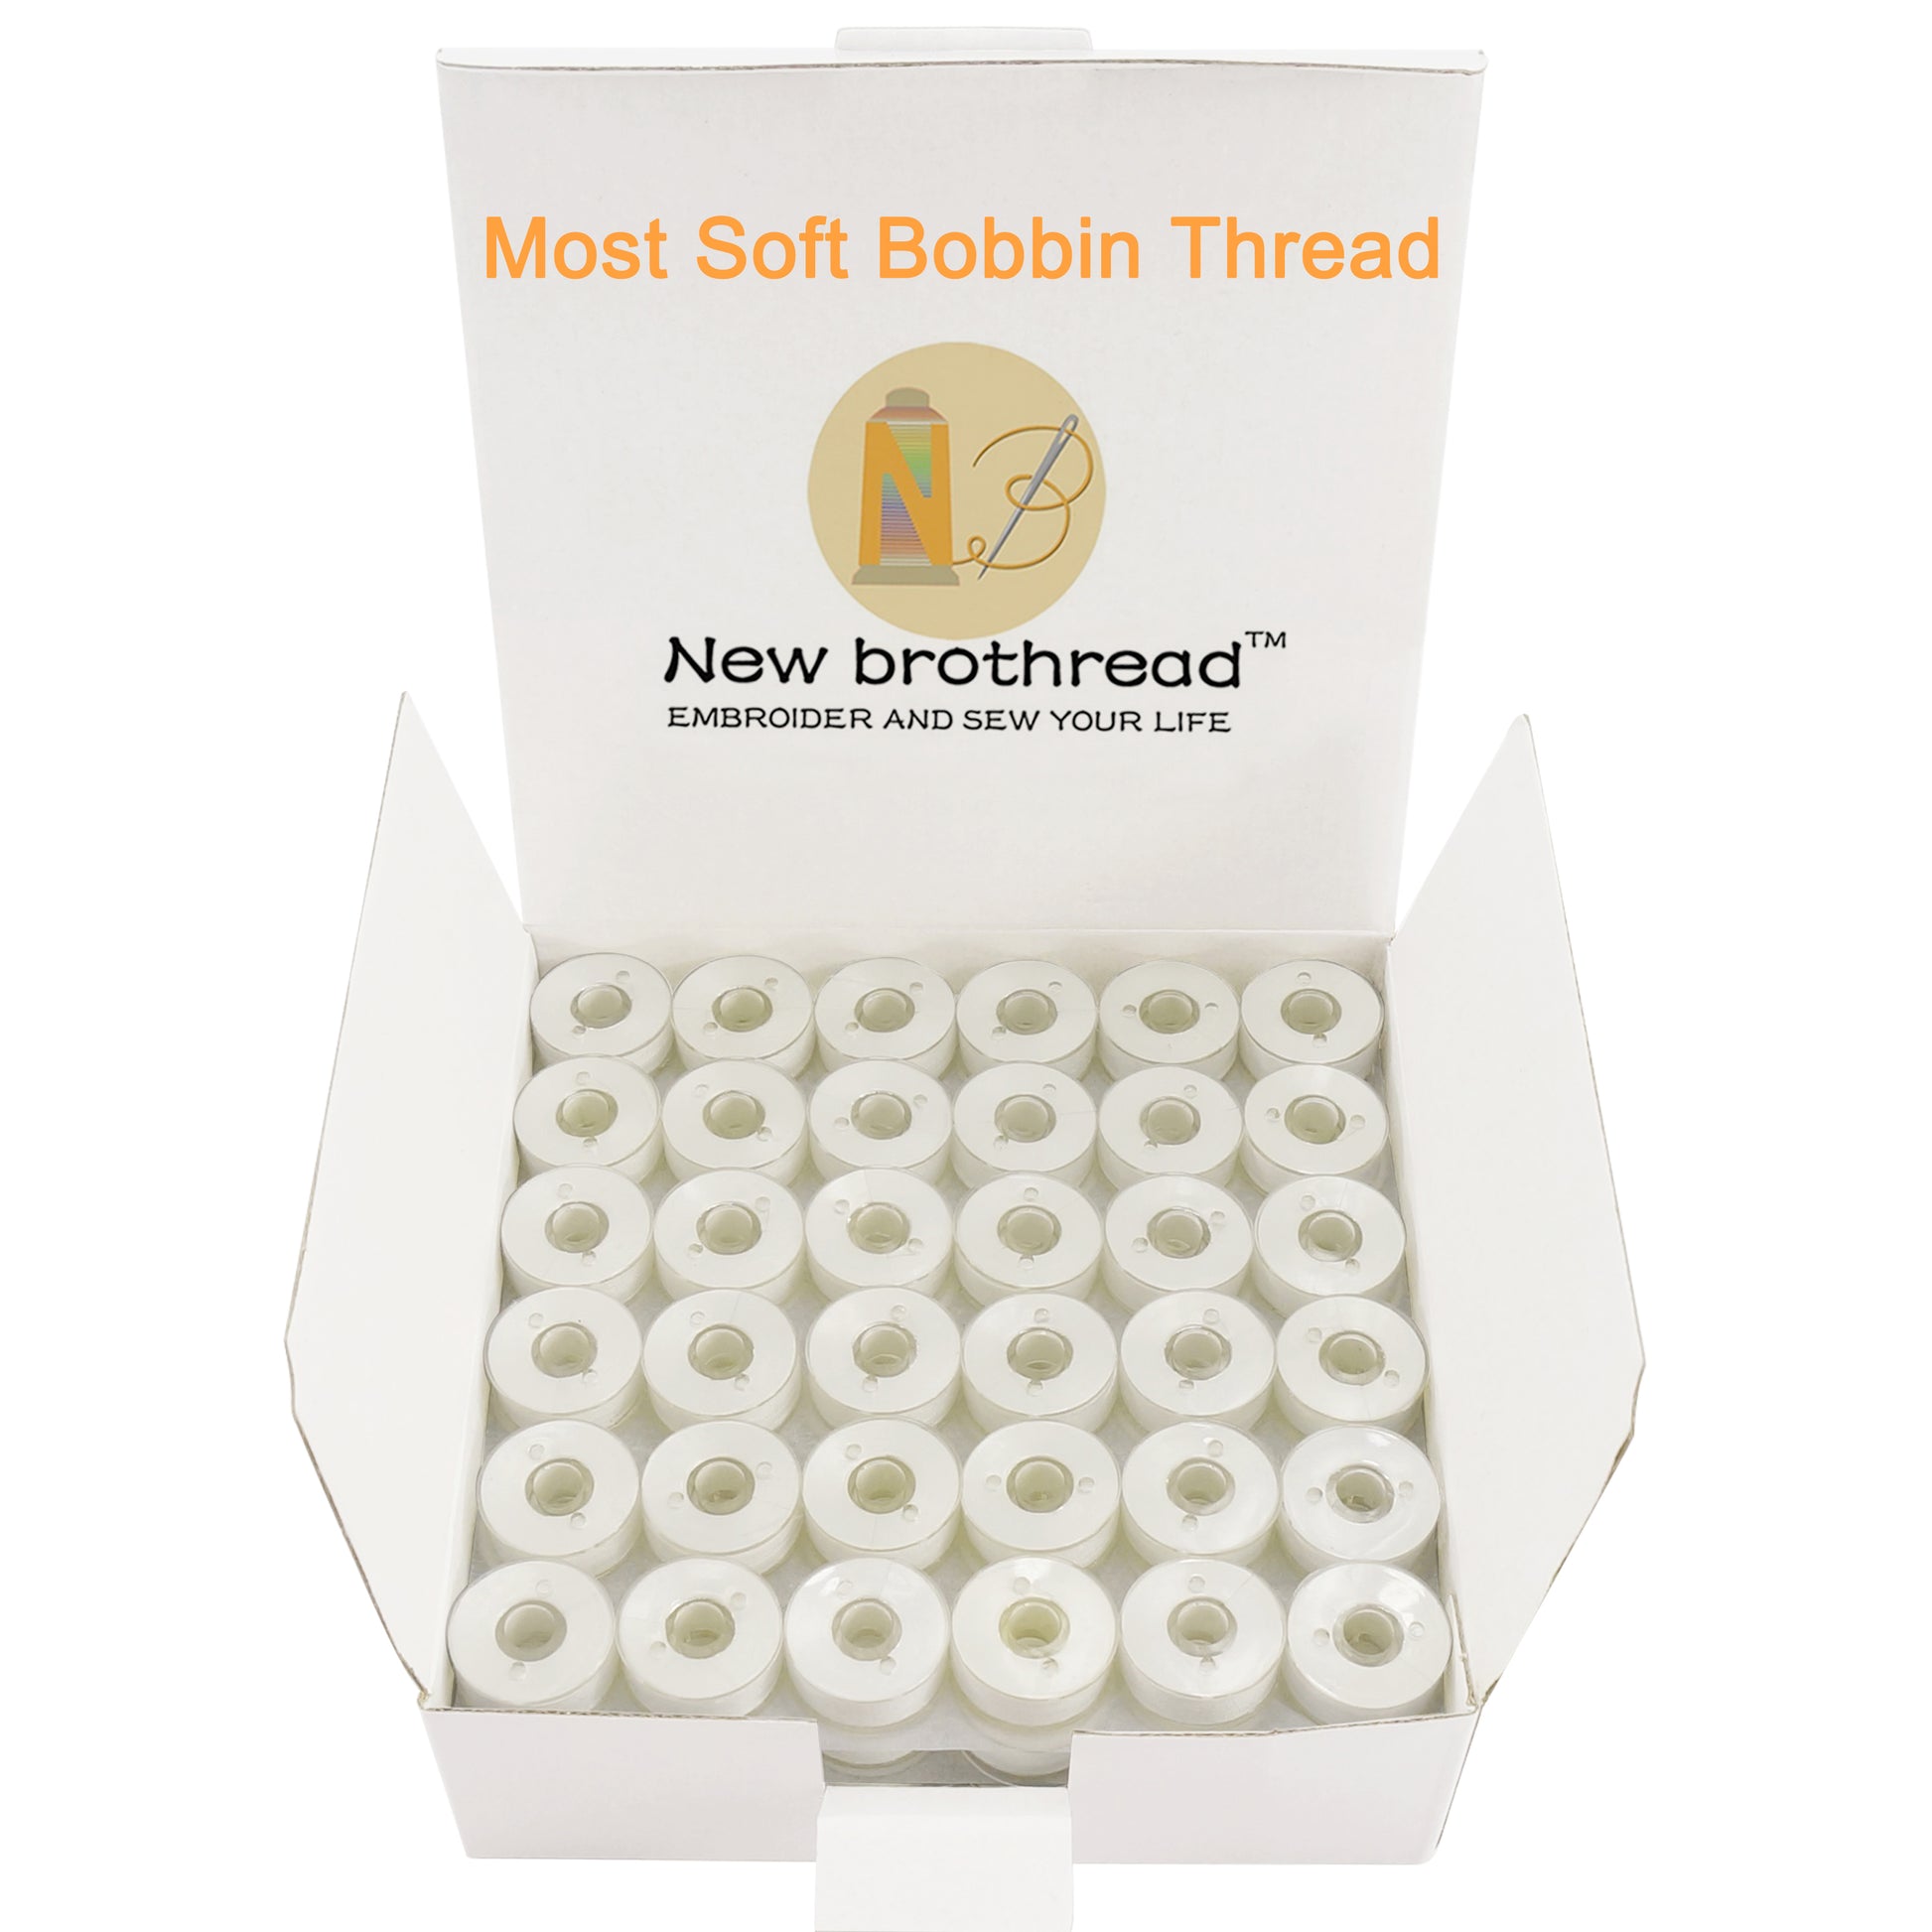 New brothread 25pcs 70D/2 (60WT) Prewound Bobbin Thread Plastic Size A